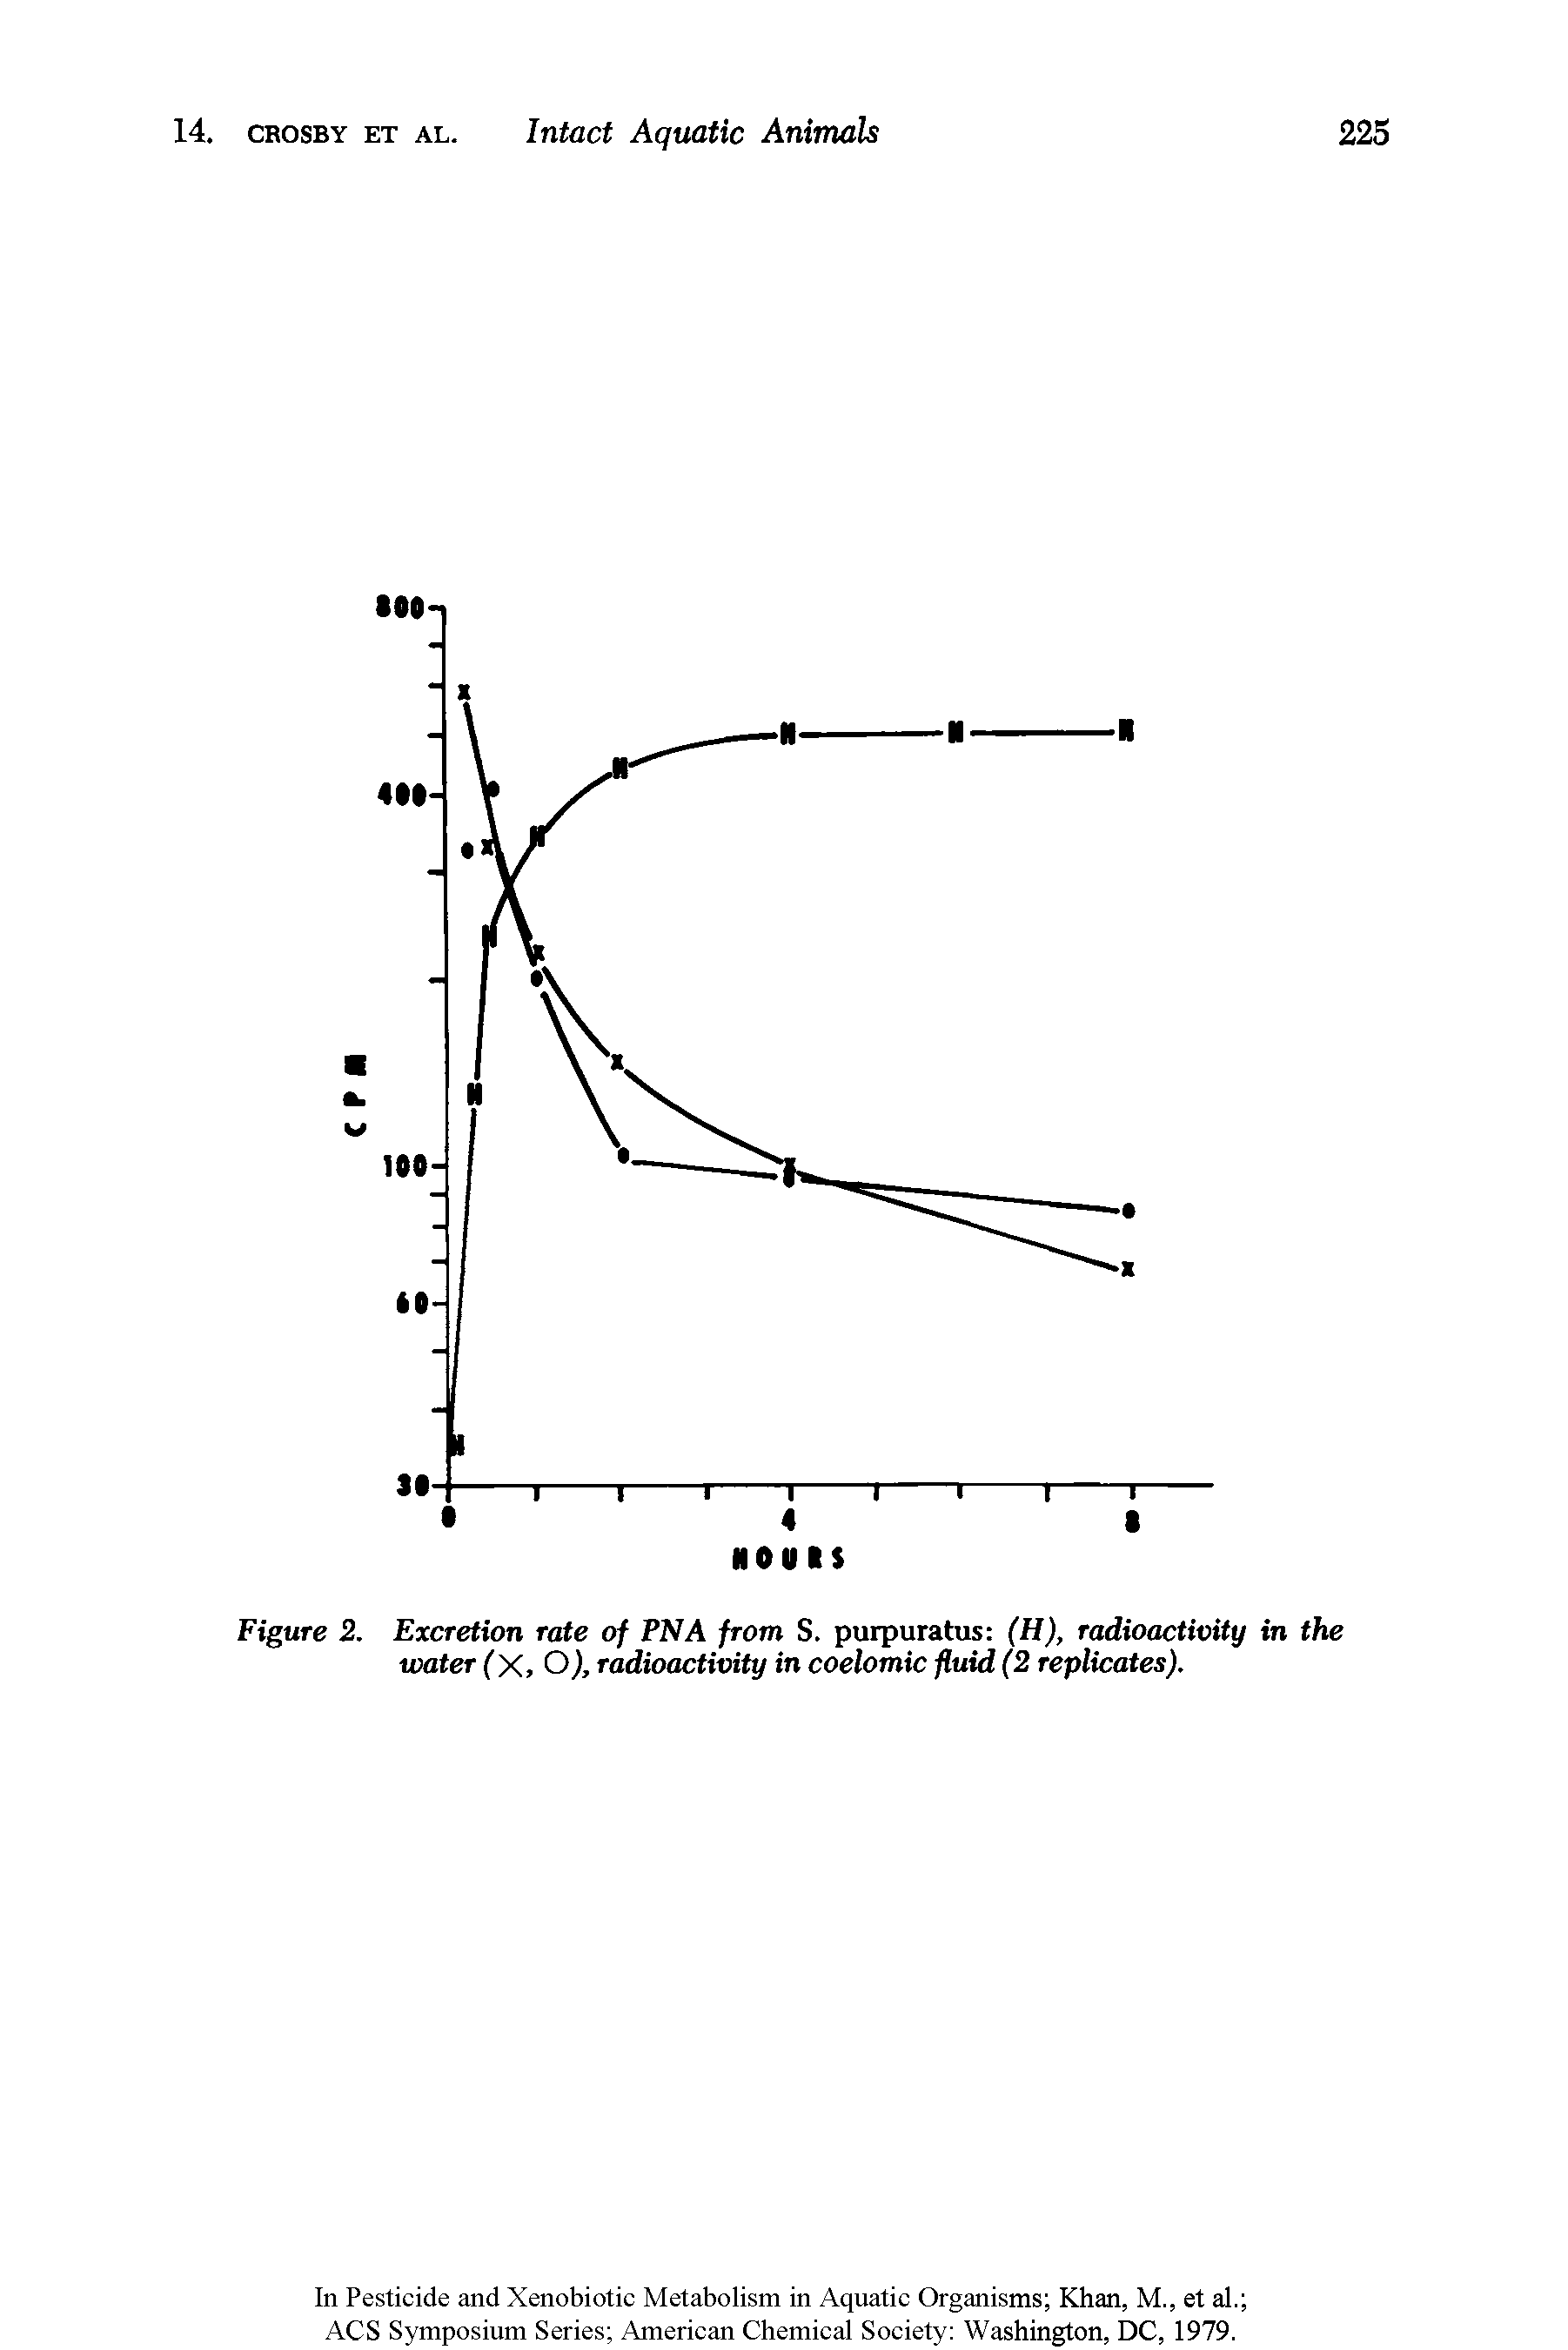 Figure 2. Excretion rate of PNA from S. purpuratus (H), radioactivity in the water (X, O), radioactivity in coelomic fluid (2 replicates).